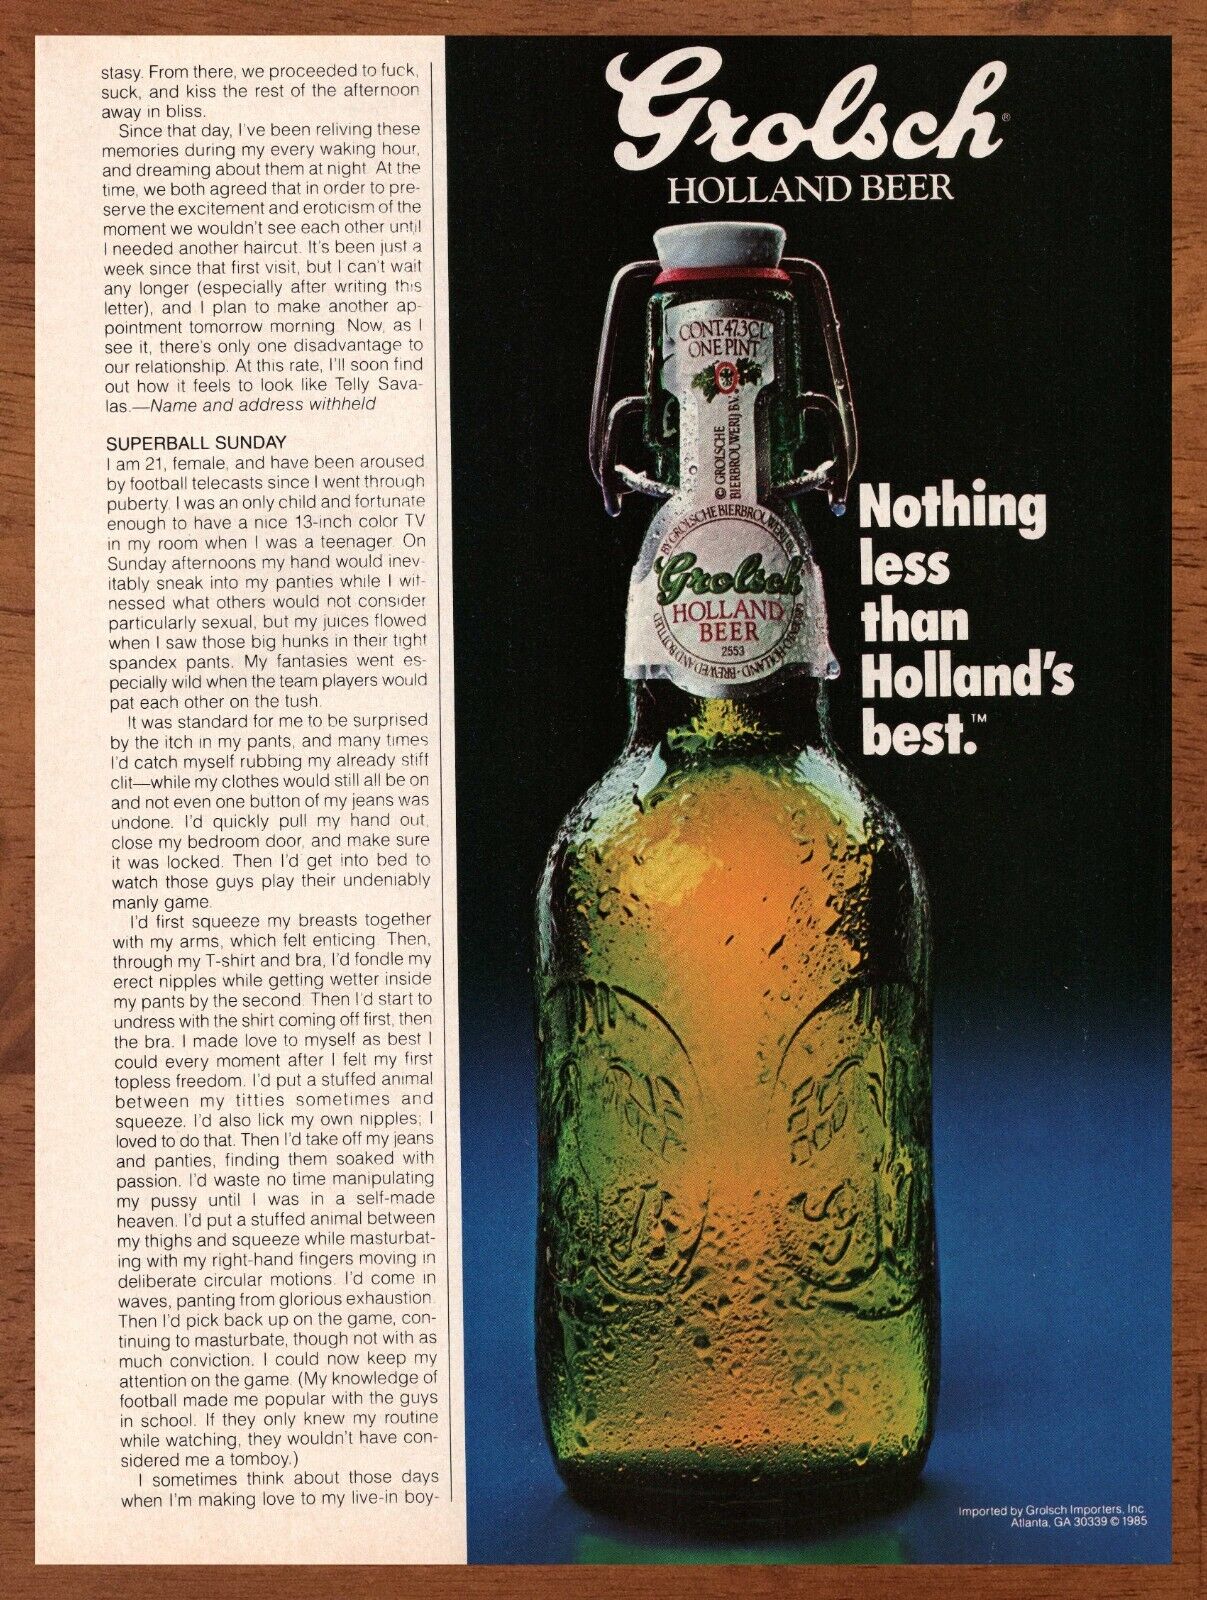 1985 Grolsch Holland Beer Vintage Print Ad/Poster Man Cave Bar Wall Pop Art 80s